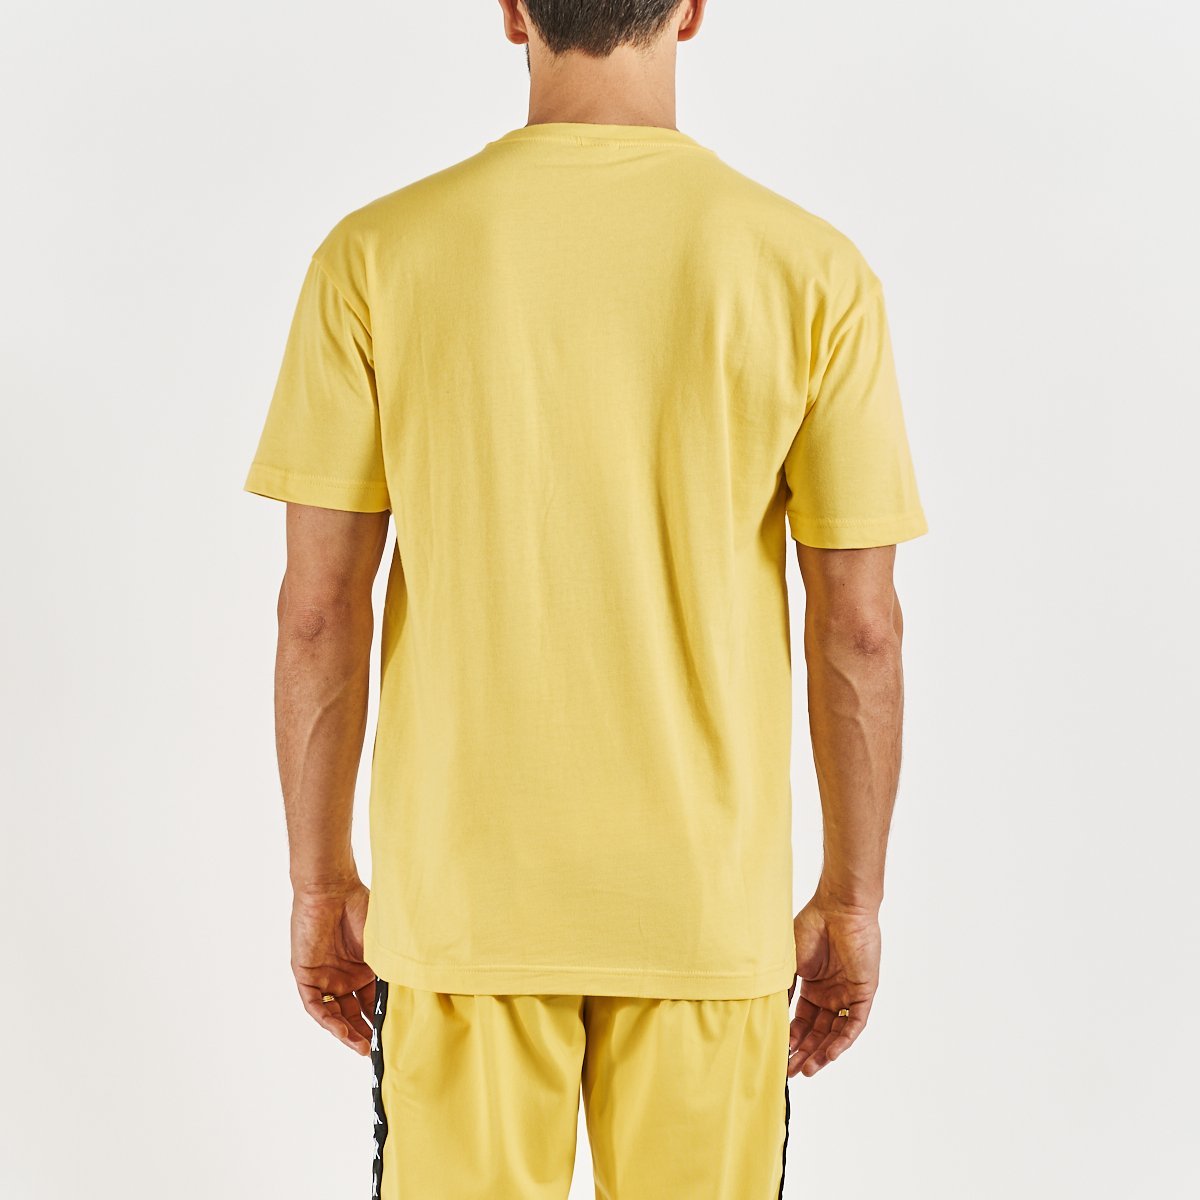 Camiseta Ecop hombre amarillo - Imagen 3